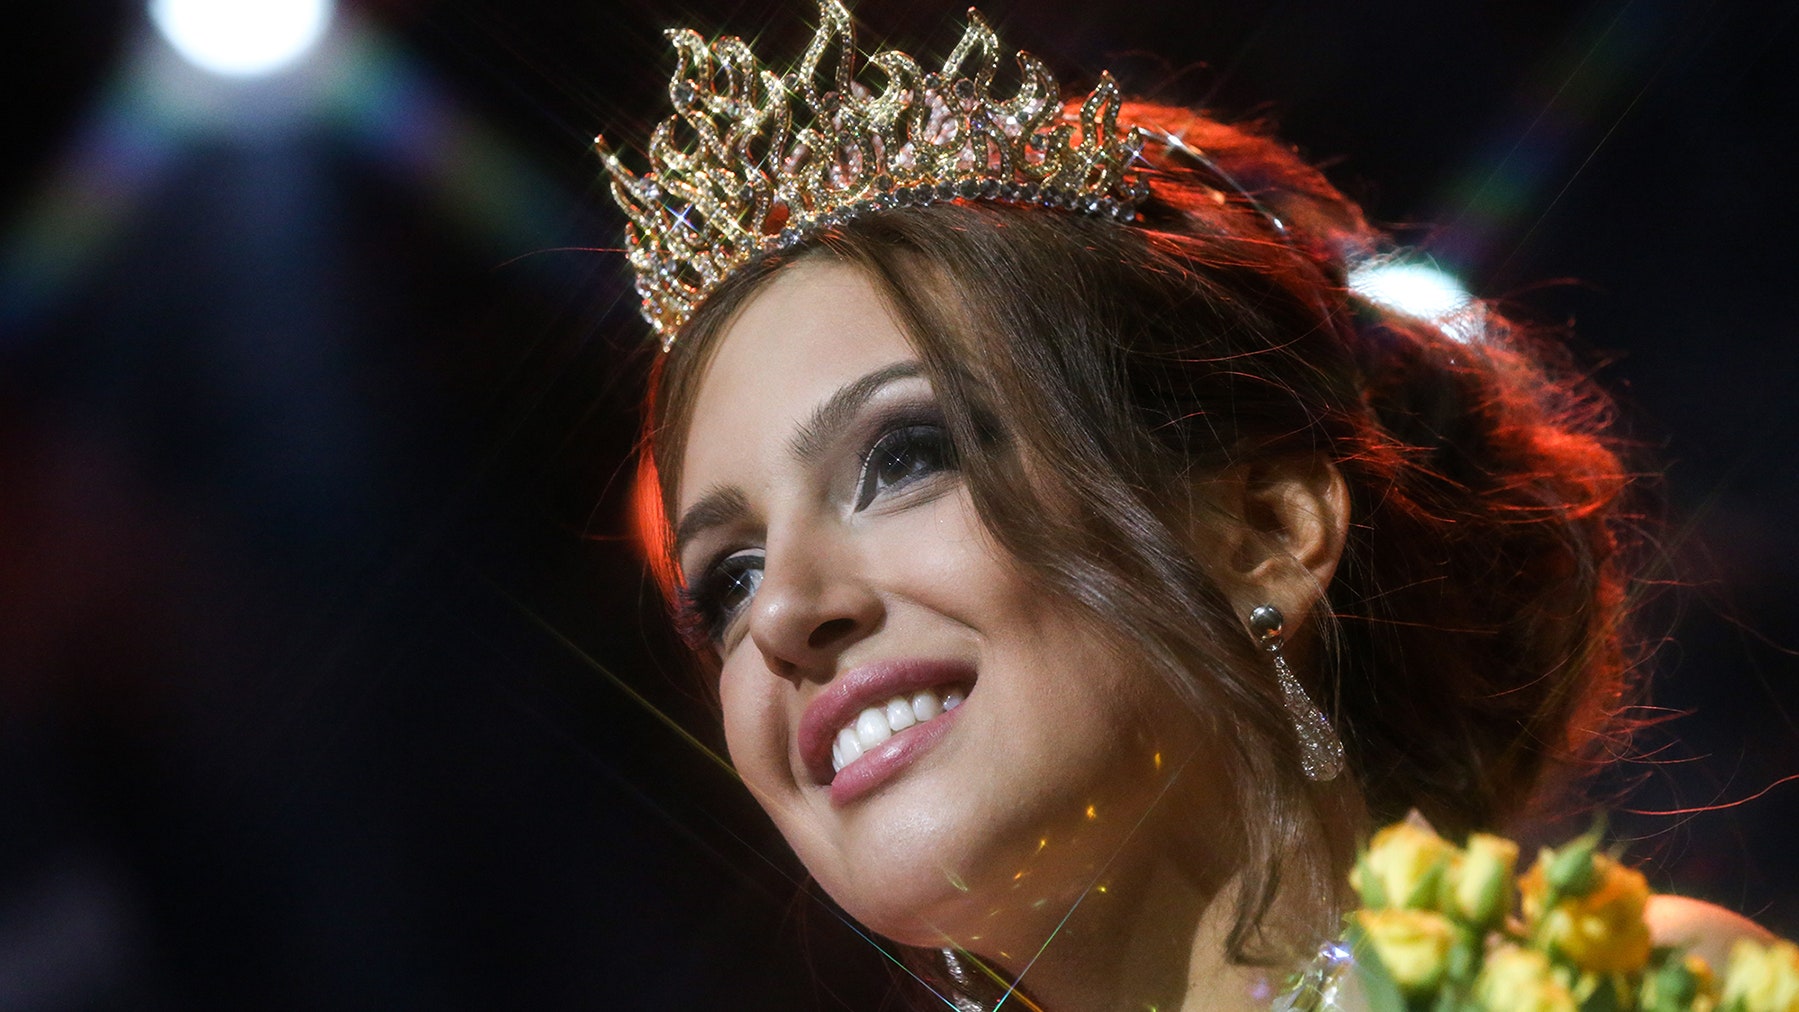 Мисс Москва 2015 Оксана Воеводина вышла замуж за короля Малайзии